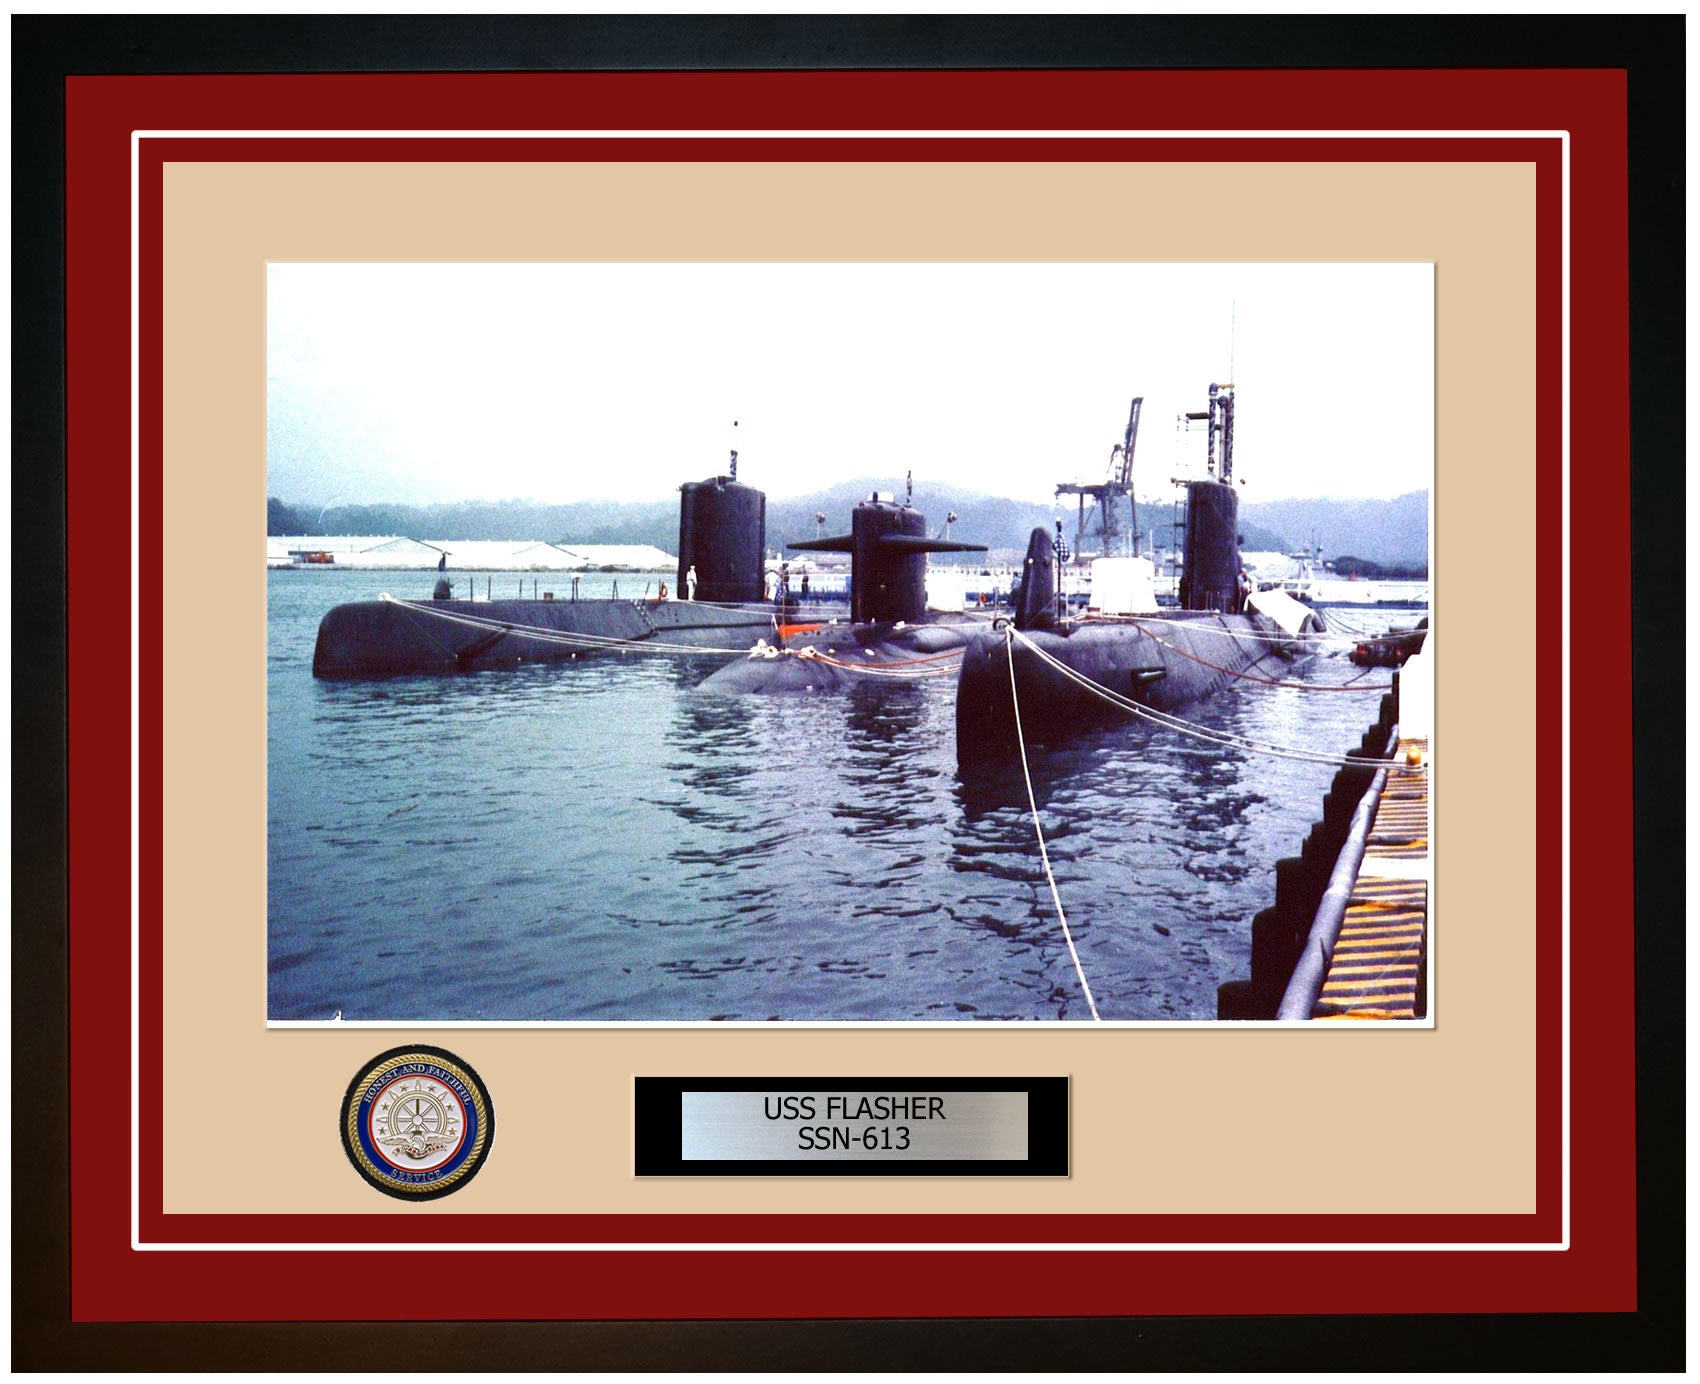 USS Flasher SSN-613 Framed Navy Ship Photo Burgundy